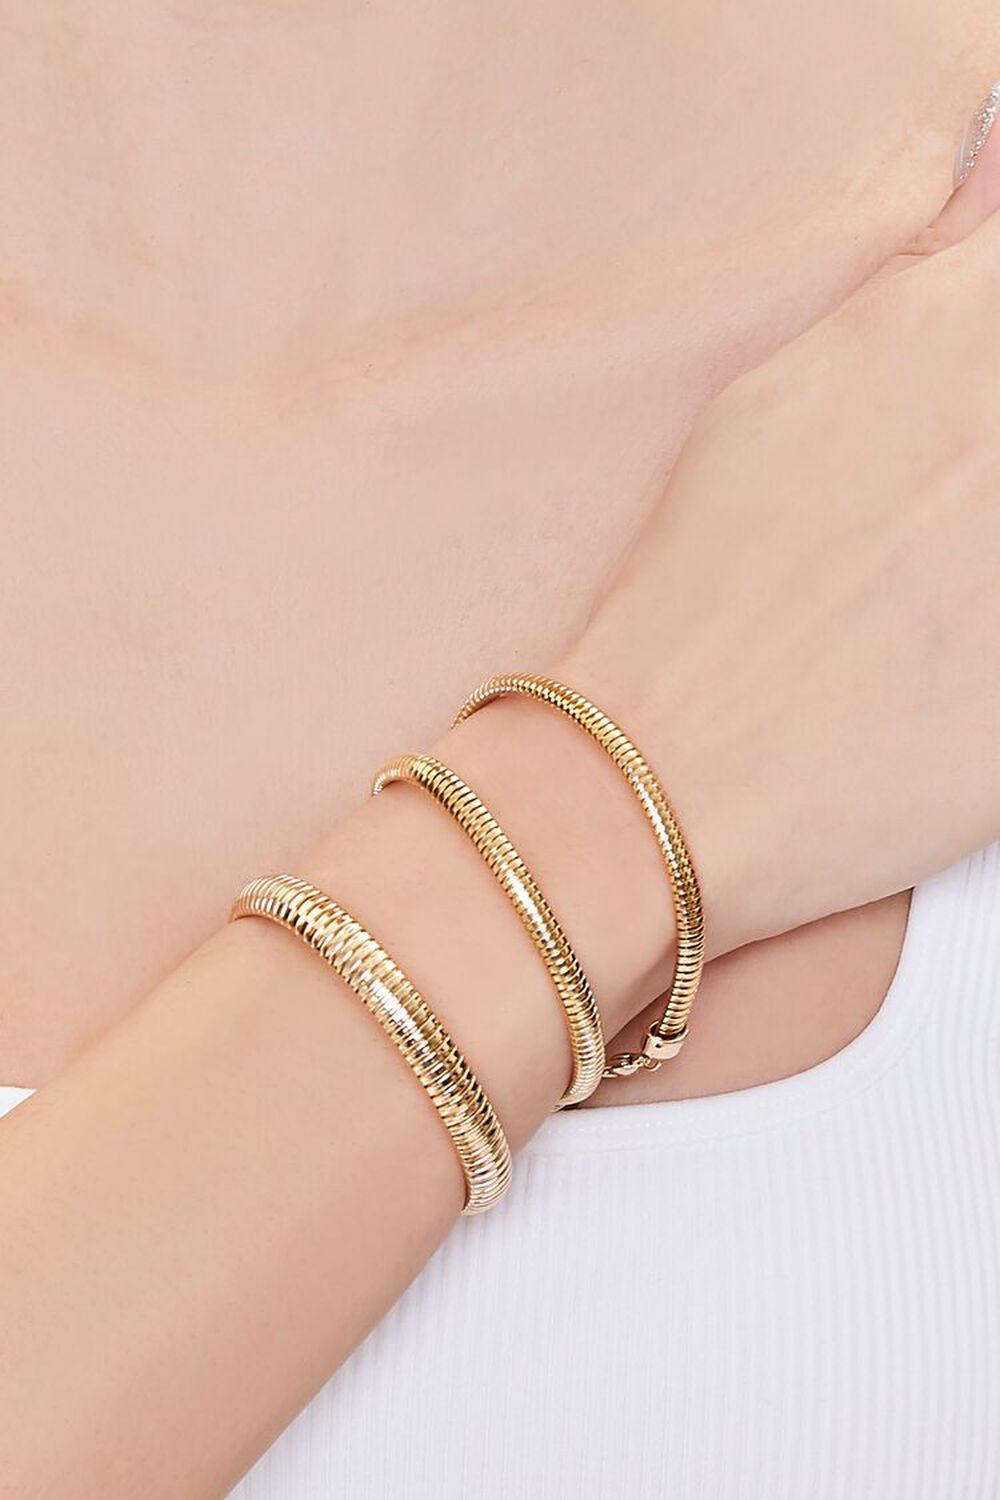 GOLD Snake Chain Bracelet Set, image 1